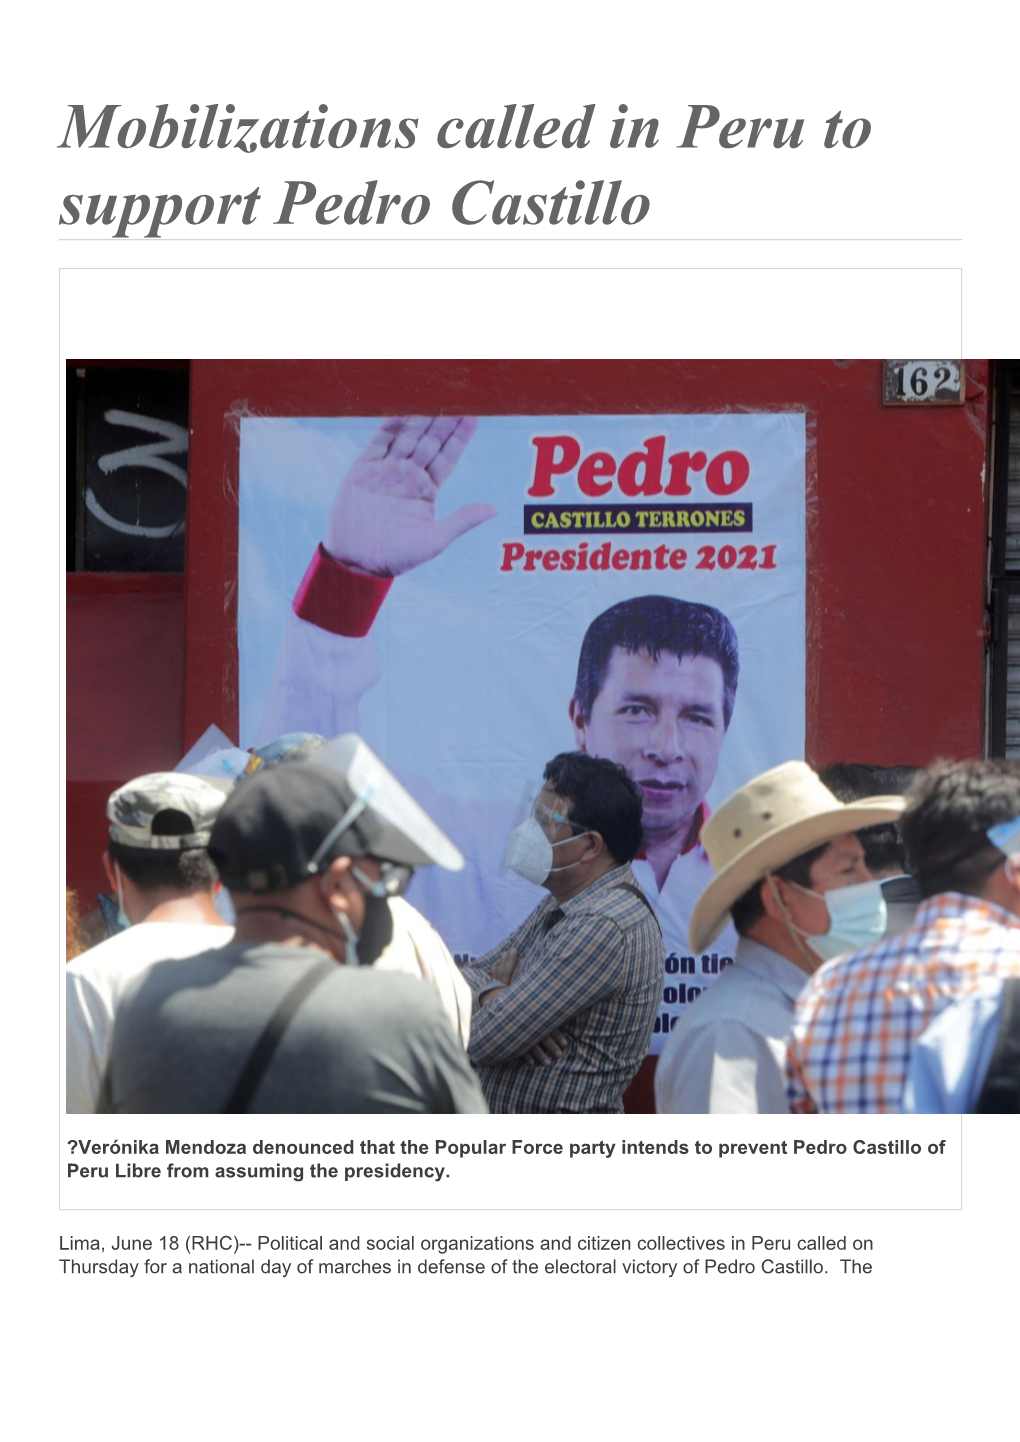 Mobilizations Called in Peru to Support Pedro Castillo